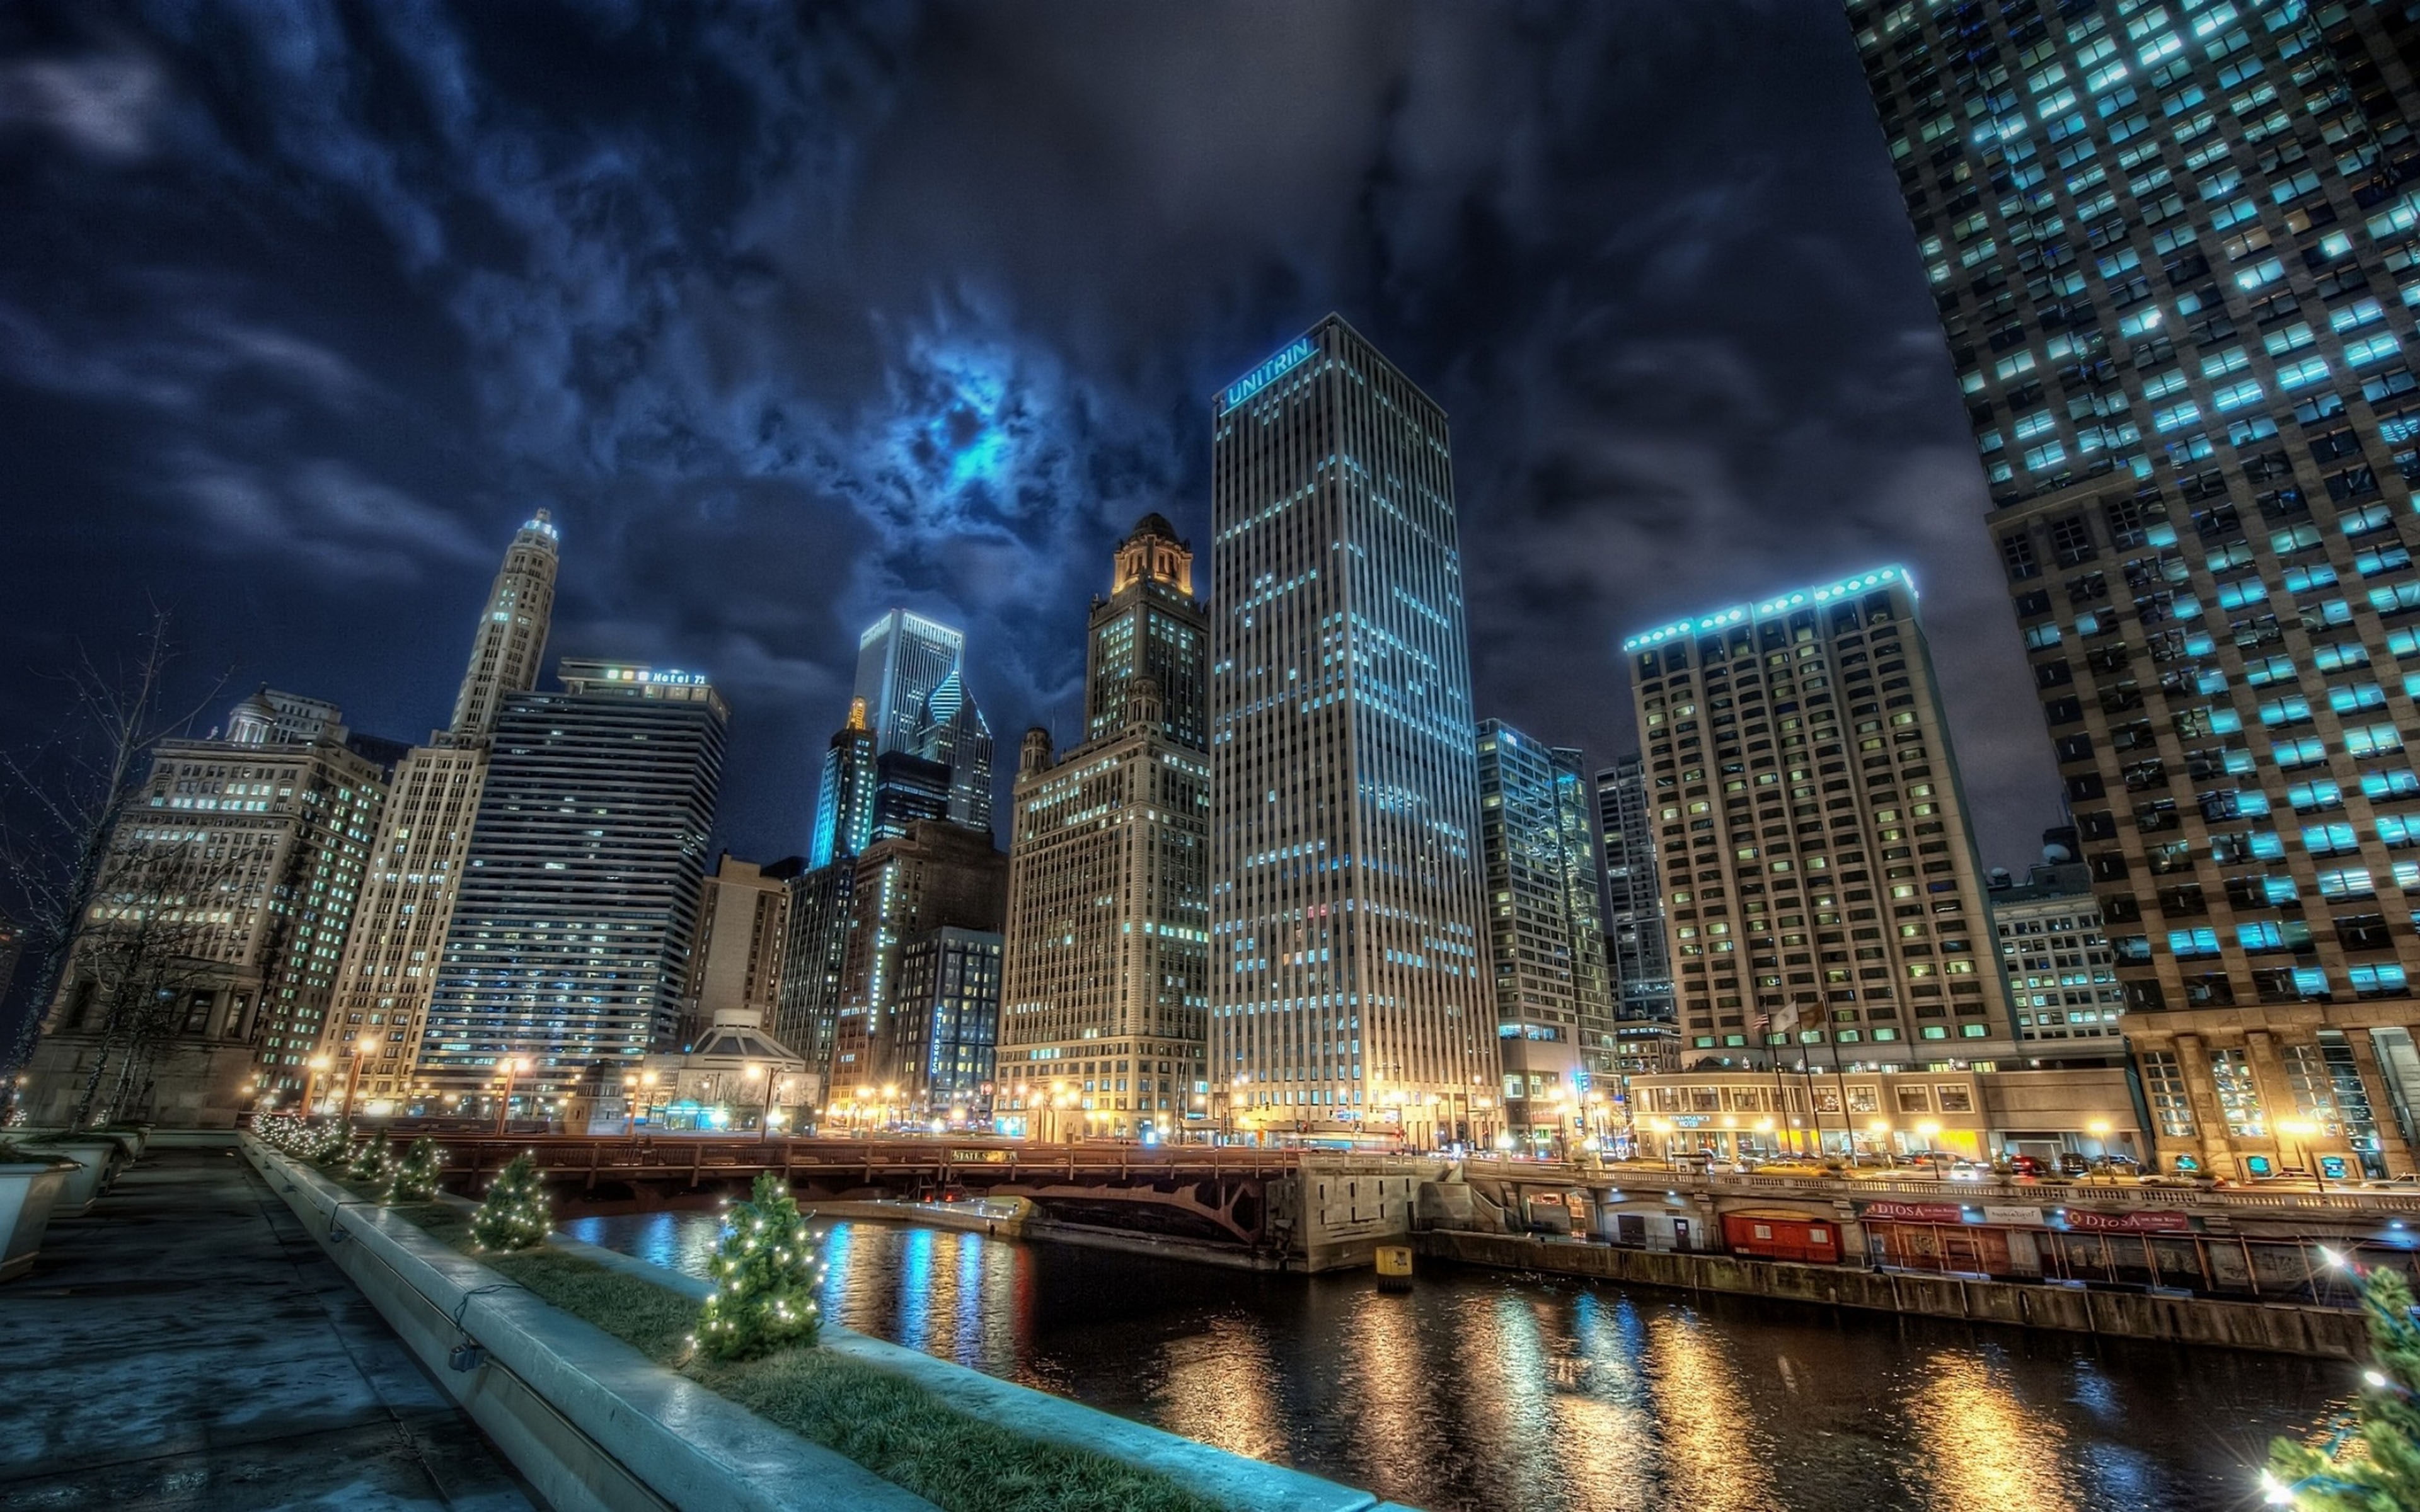 Chicago Skyline at Night 4K Ultra HD TV Wallpaper for Desktop Laptop Tablet And Mobile Phones 3840×2400